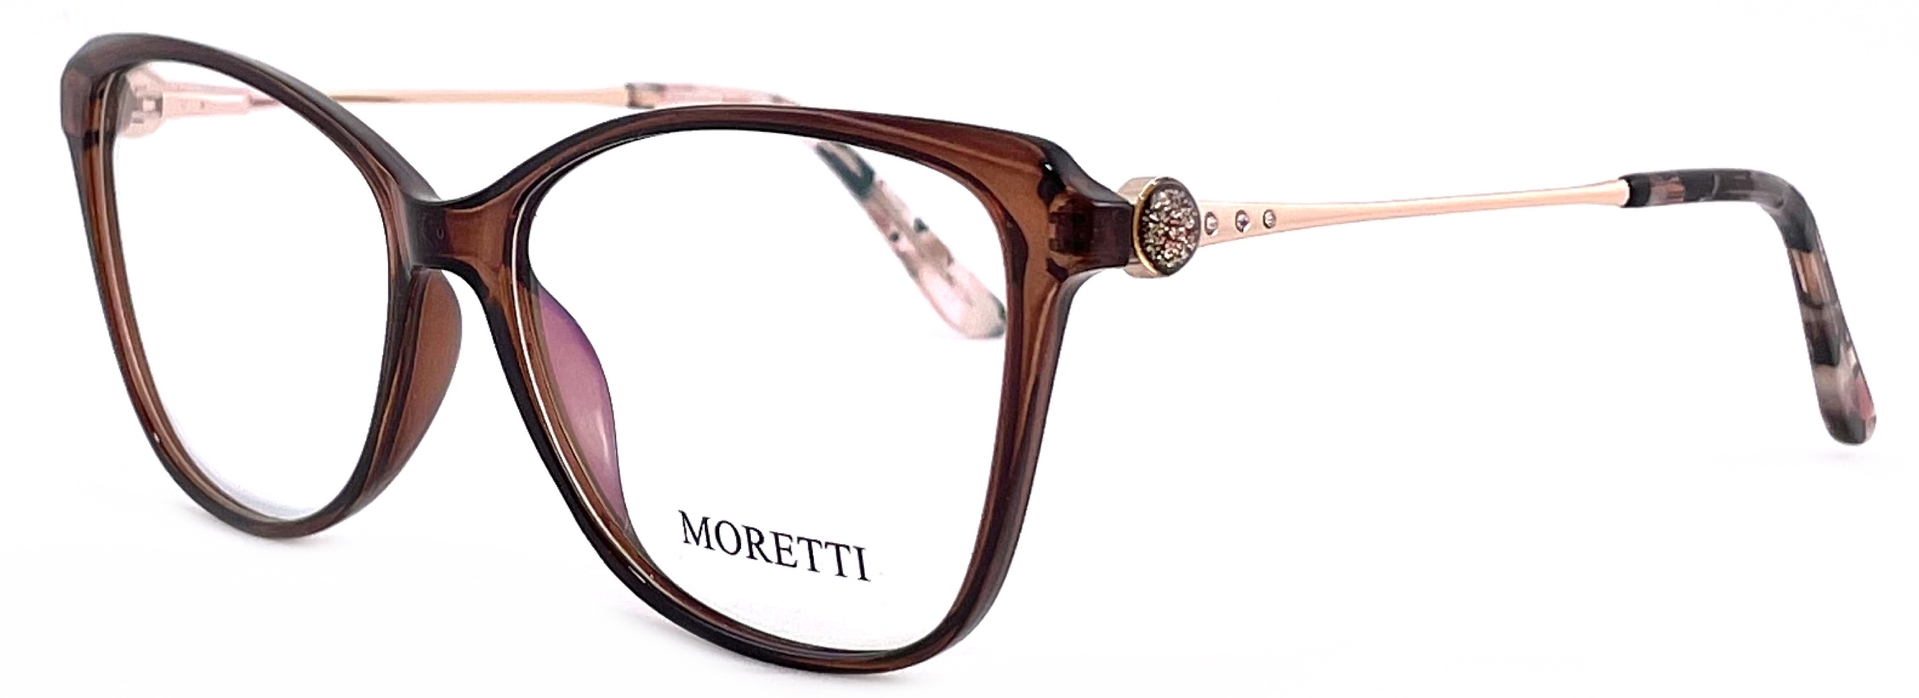 Moretti FL3004 C3 2